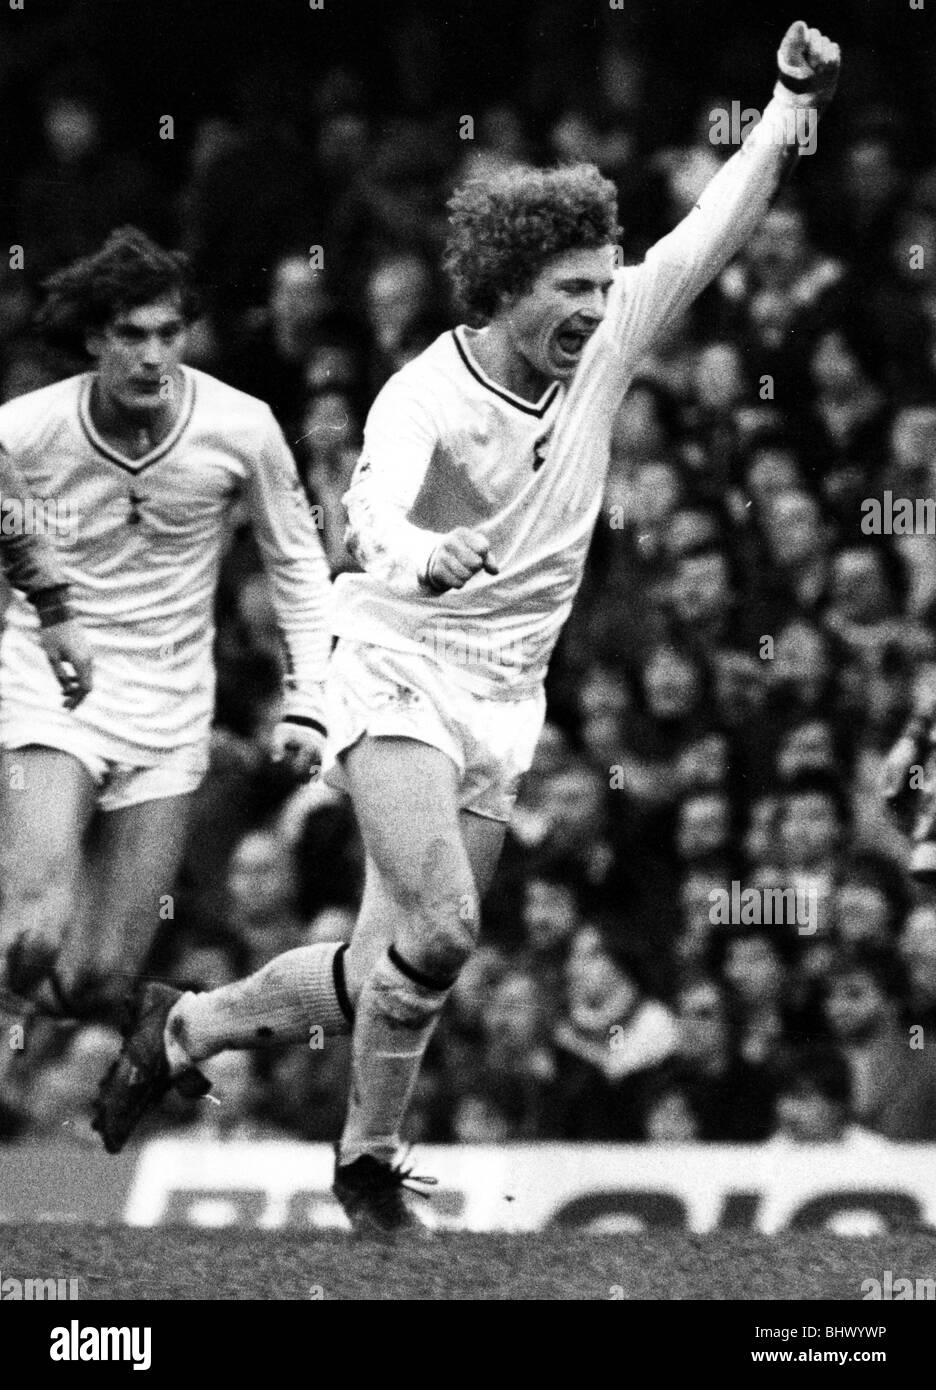 Football FA Cup Quarter Final match Chelsea v Tottenham Hotspur Spurs goalscorer Mike Hazard celebrates after scoring March 1982 Stock Photo